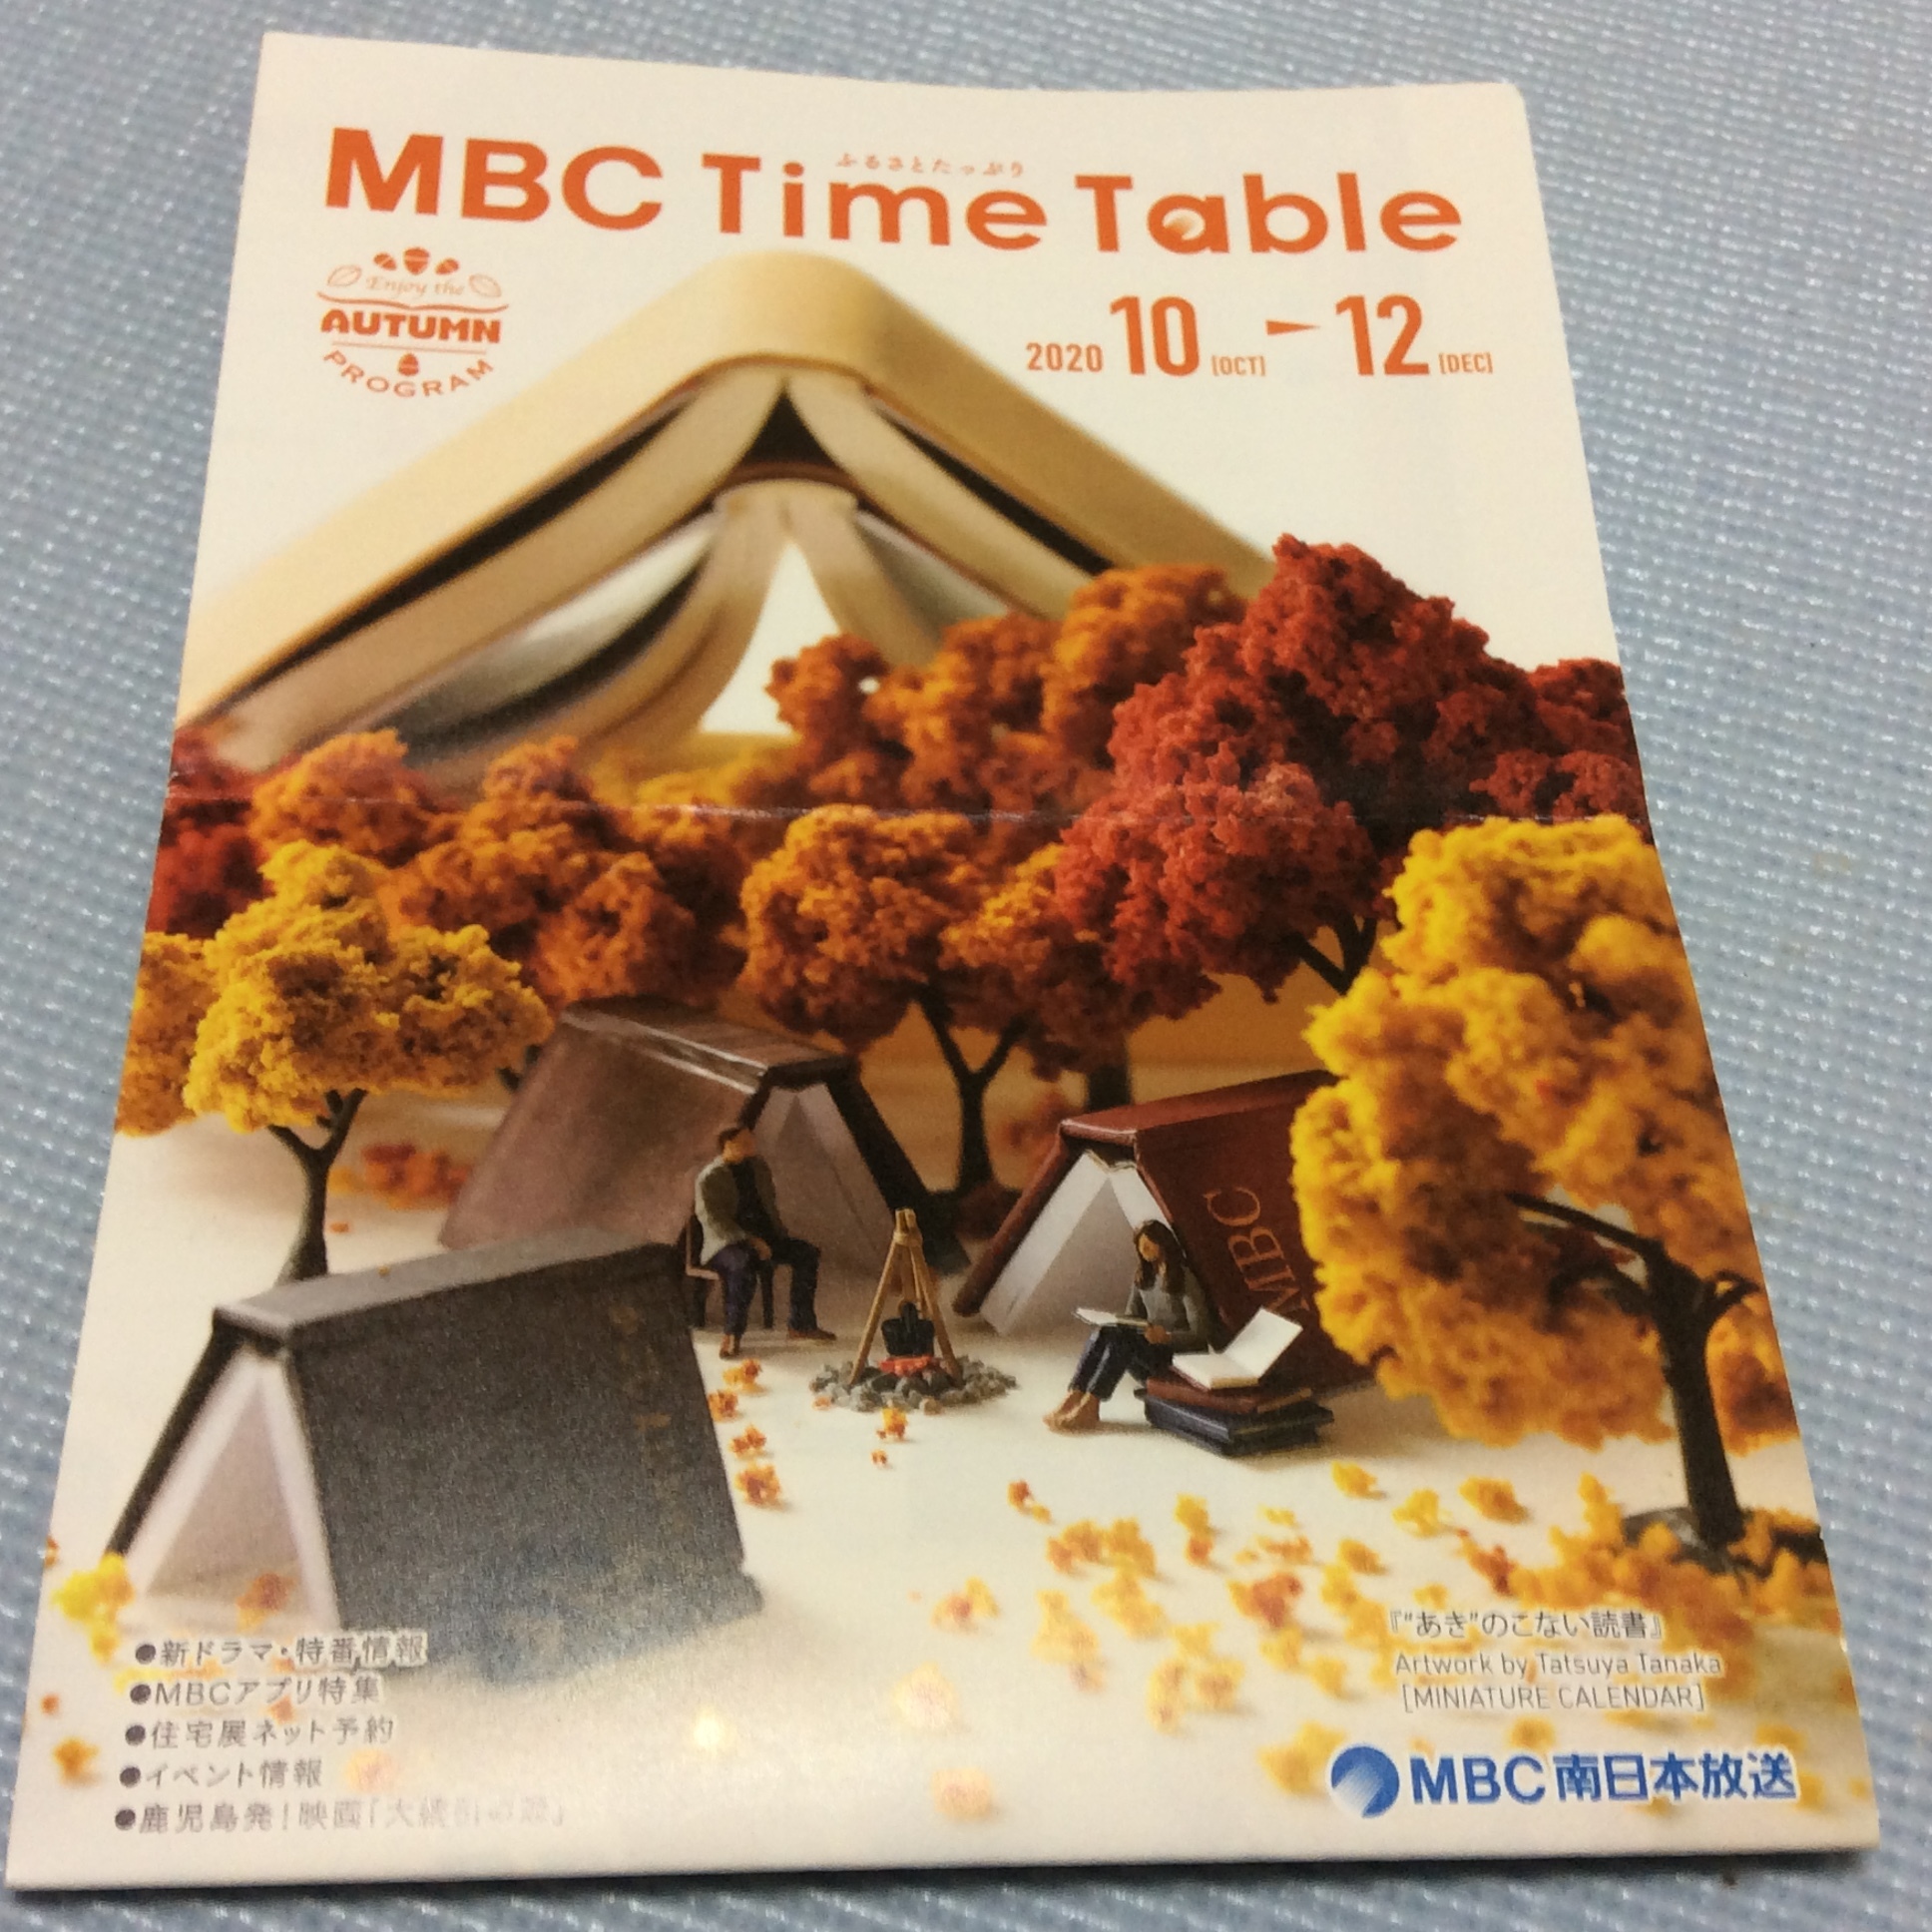 mbc radio time table